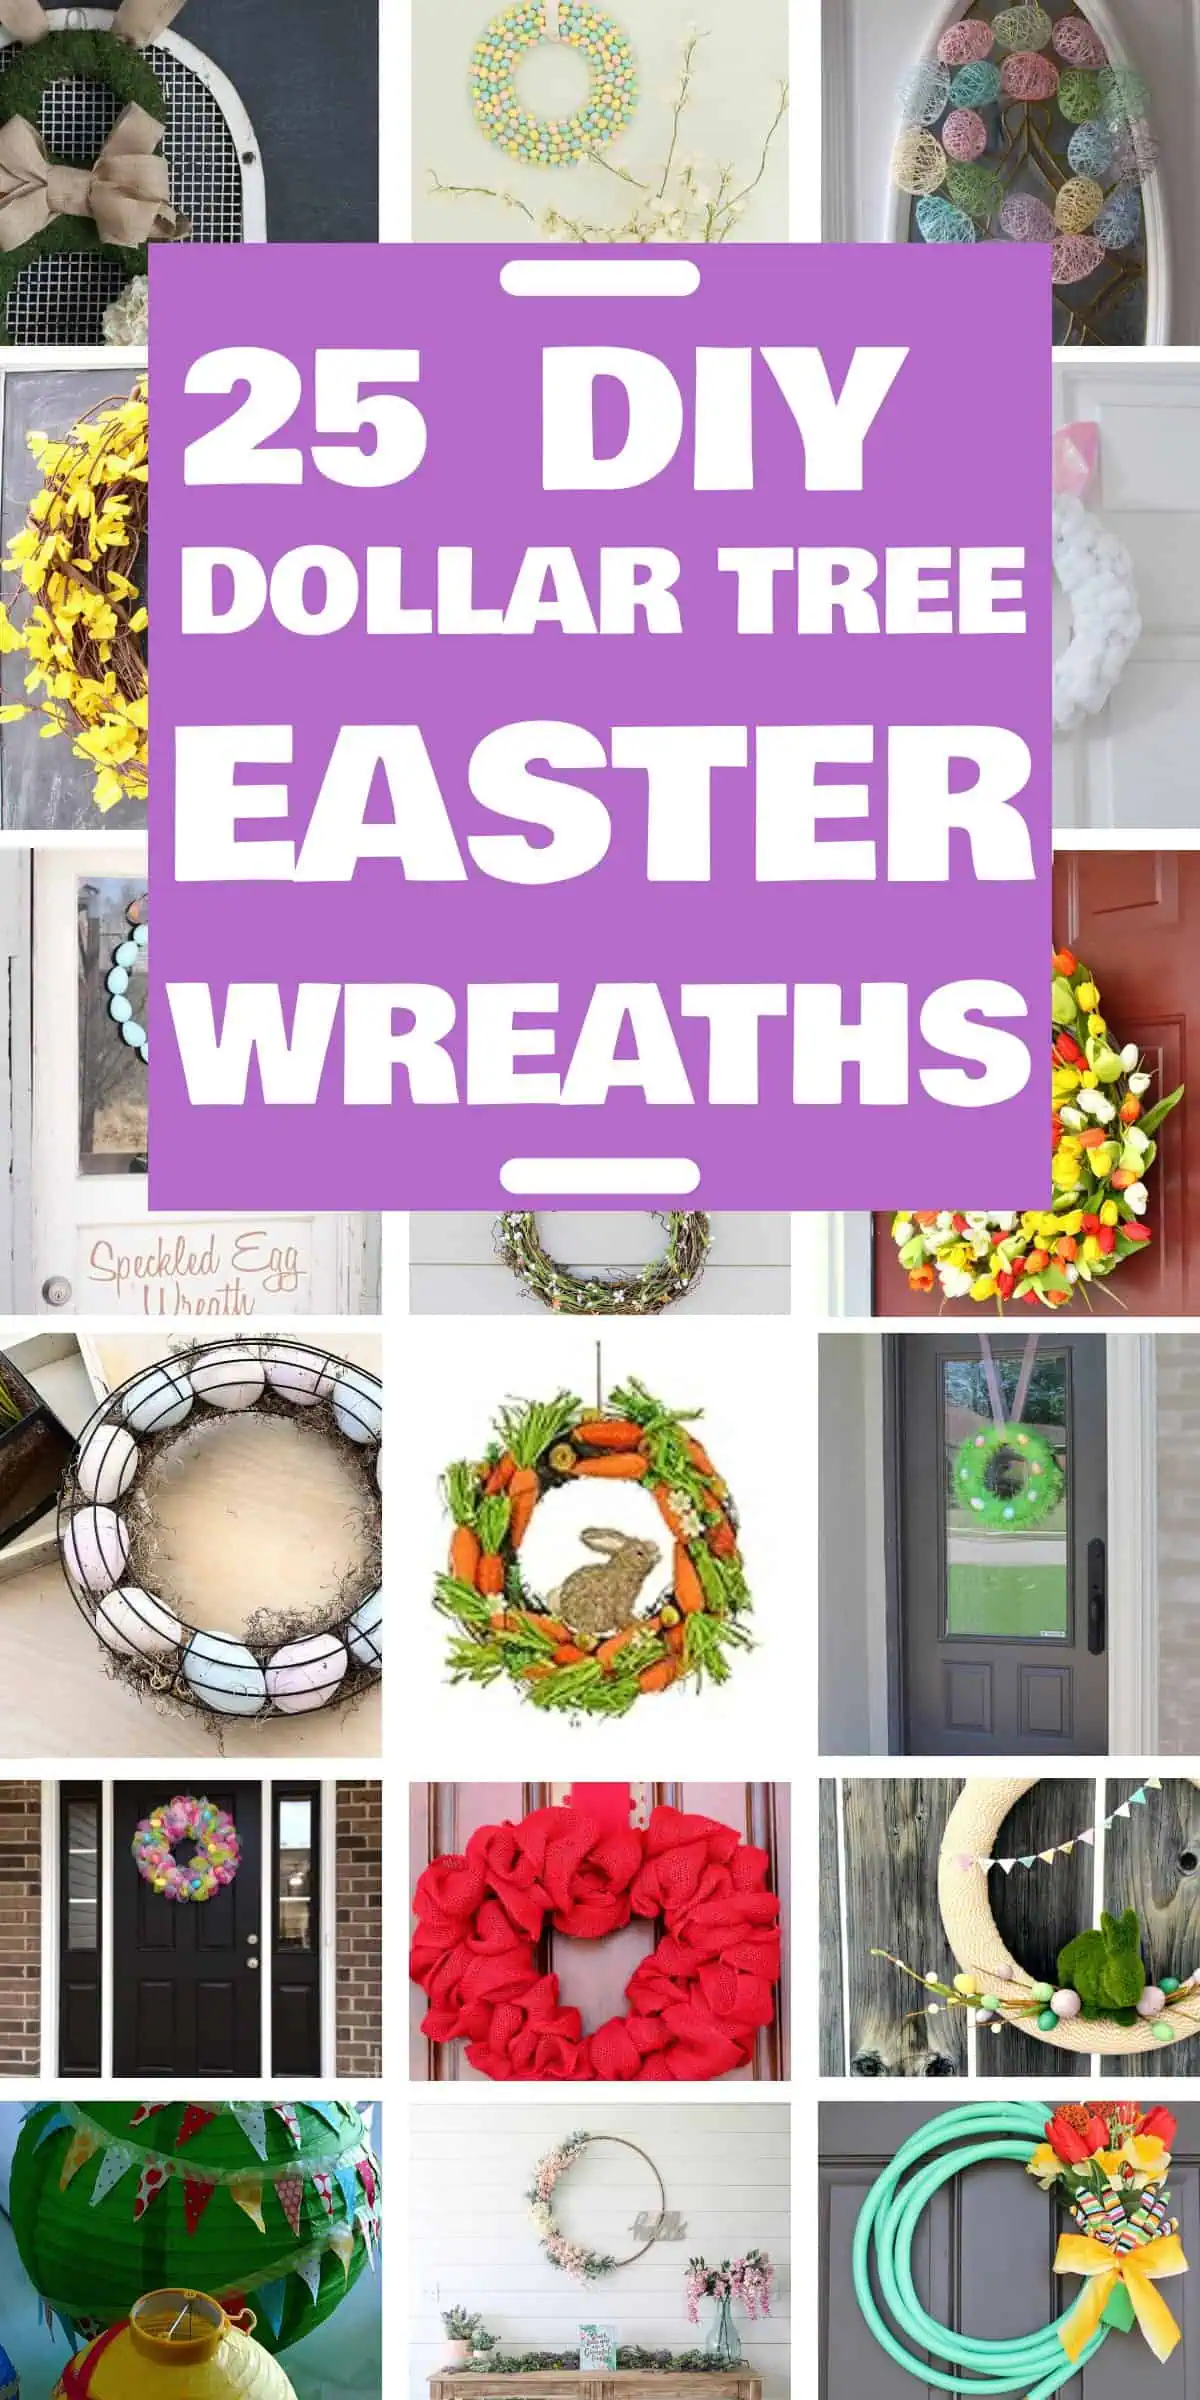 25 DIY Dollar Tree Easter Wreaths for a Festive Spring Decoration